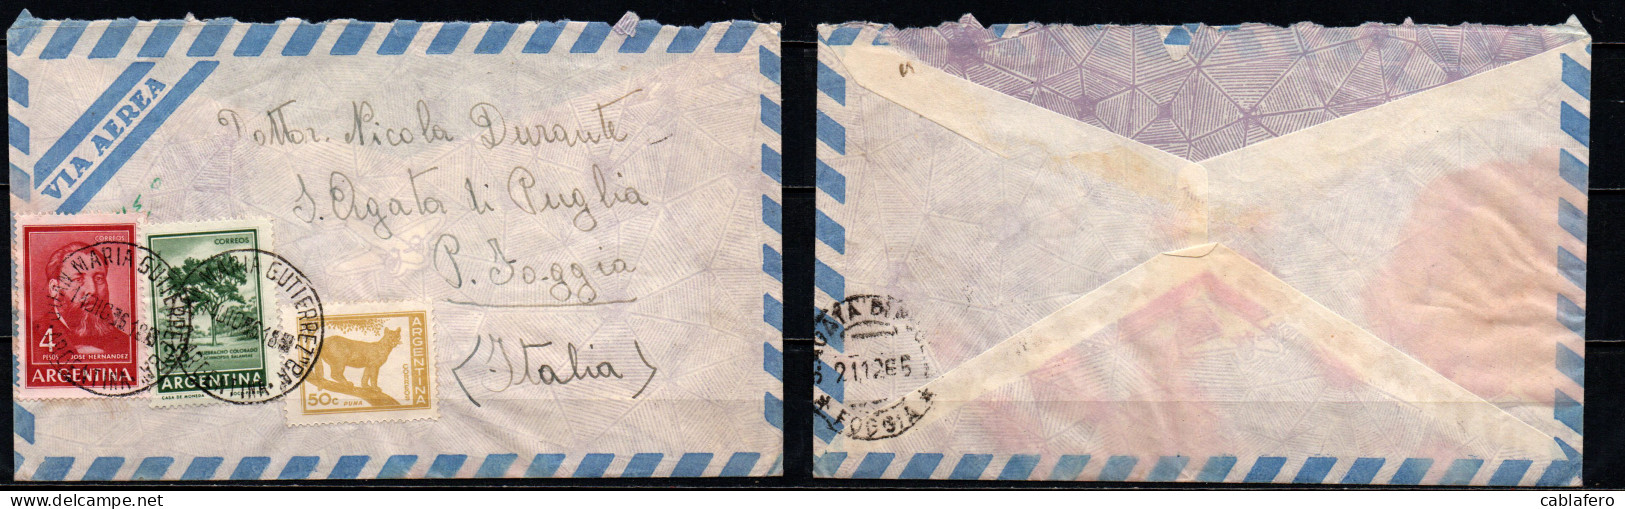 ARGENTINA - 14.12.1966 - BUSTA DA GUTIERREZ VERSO L'ITALIA (S. AGATA DI PUGLIA) - Cartas & Documentos